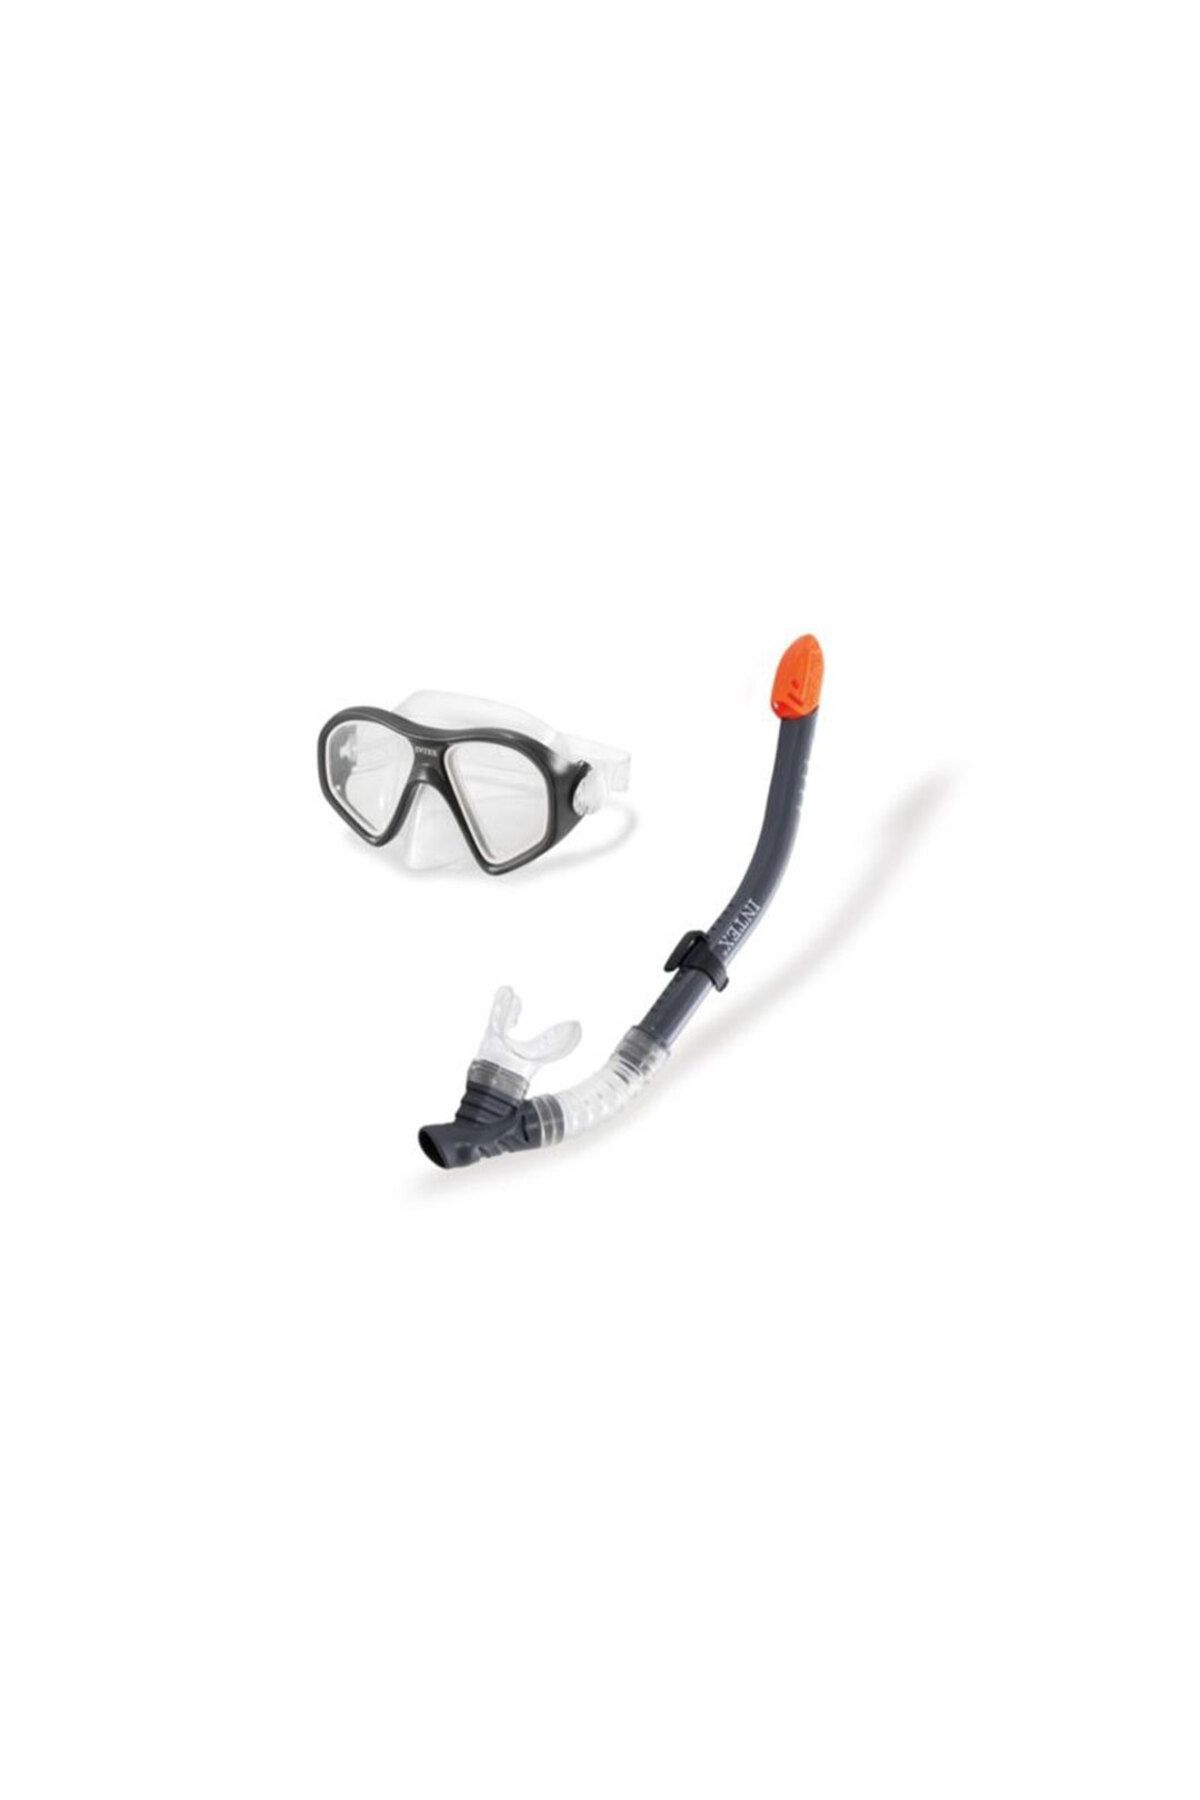 Intex Şnorkel ve Maske Yüzme Seti - Siyah Renk